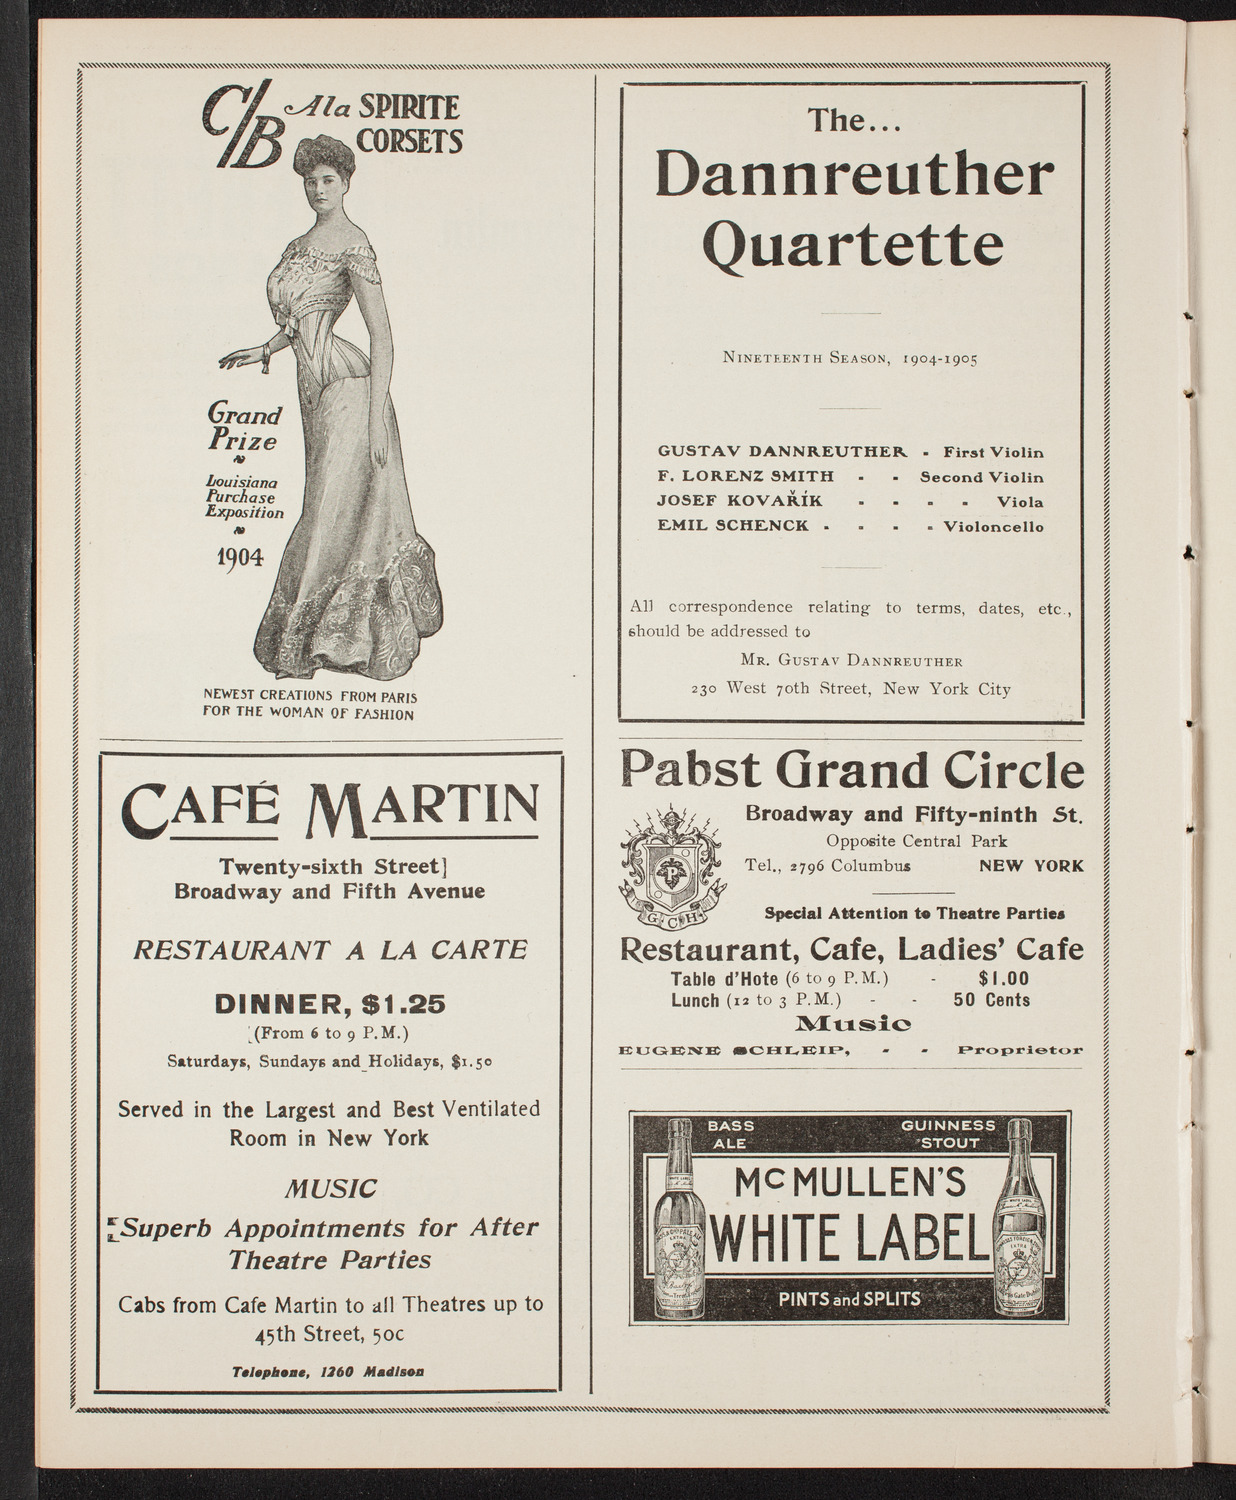 New York Philharmonic, February 10, 1905, program page 8